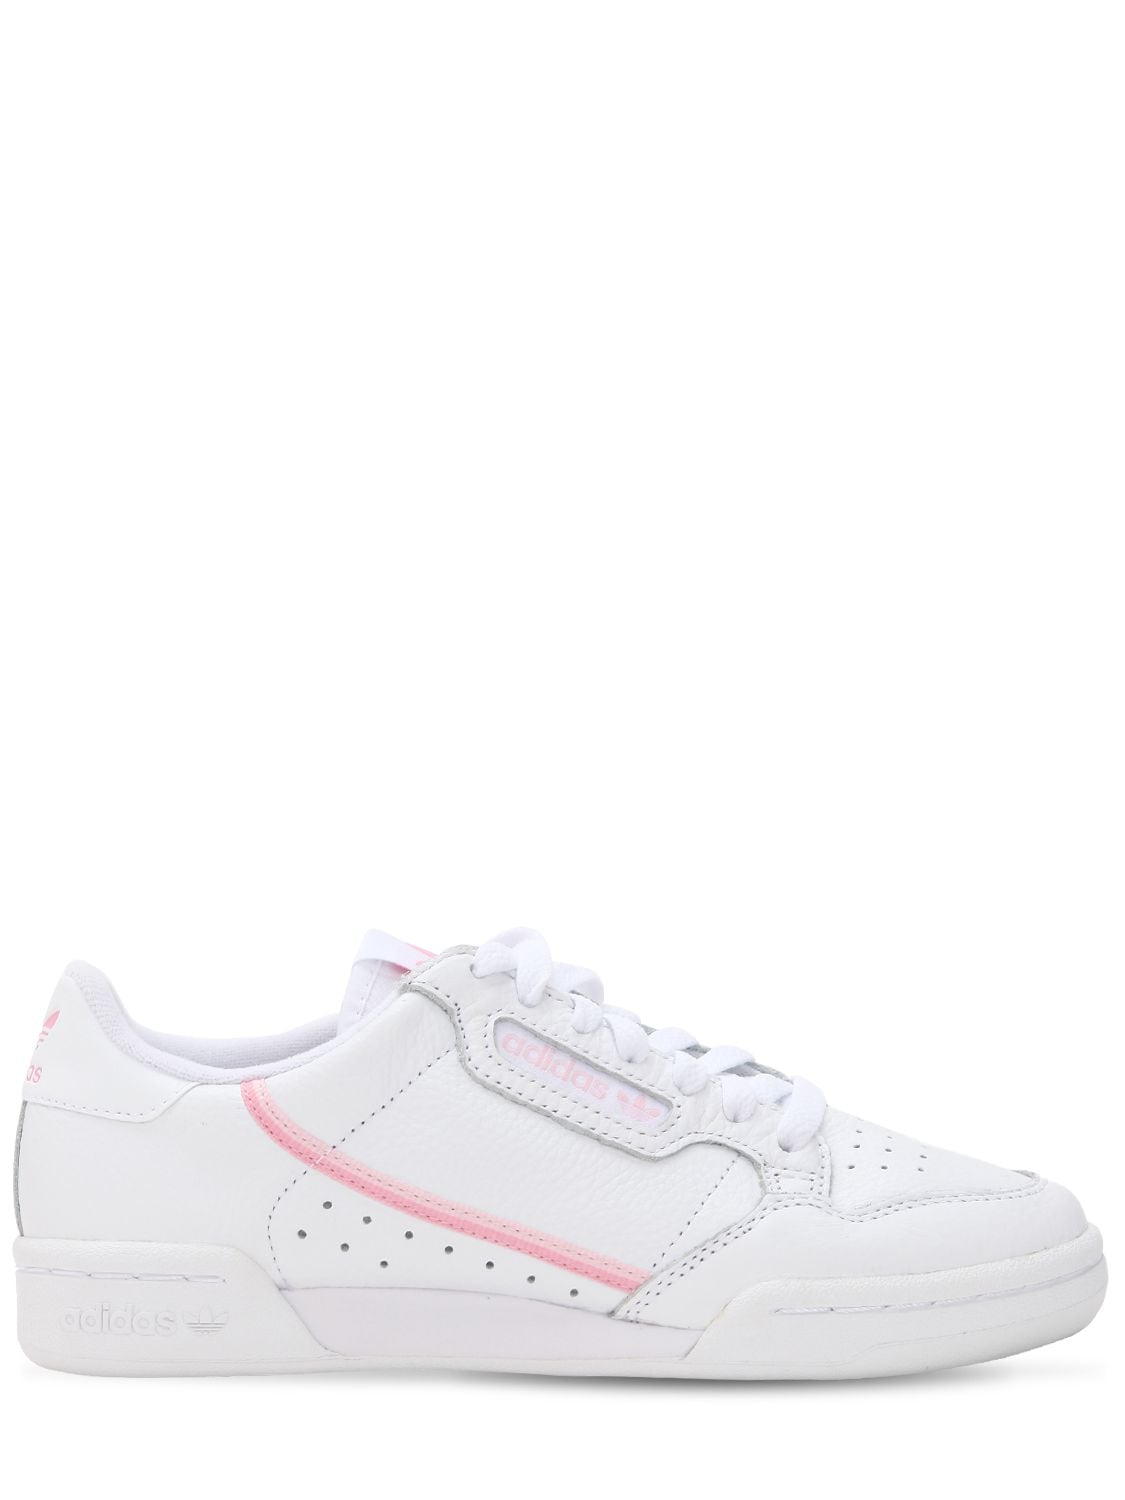 adidas pink continental 80